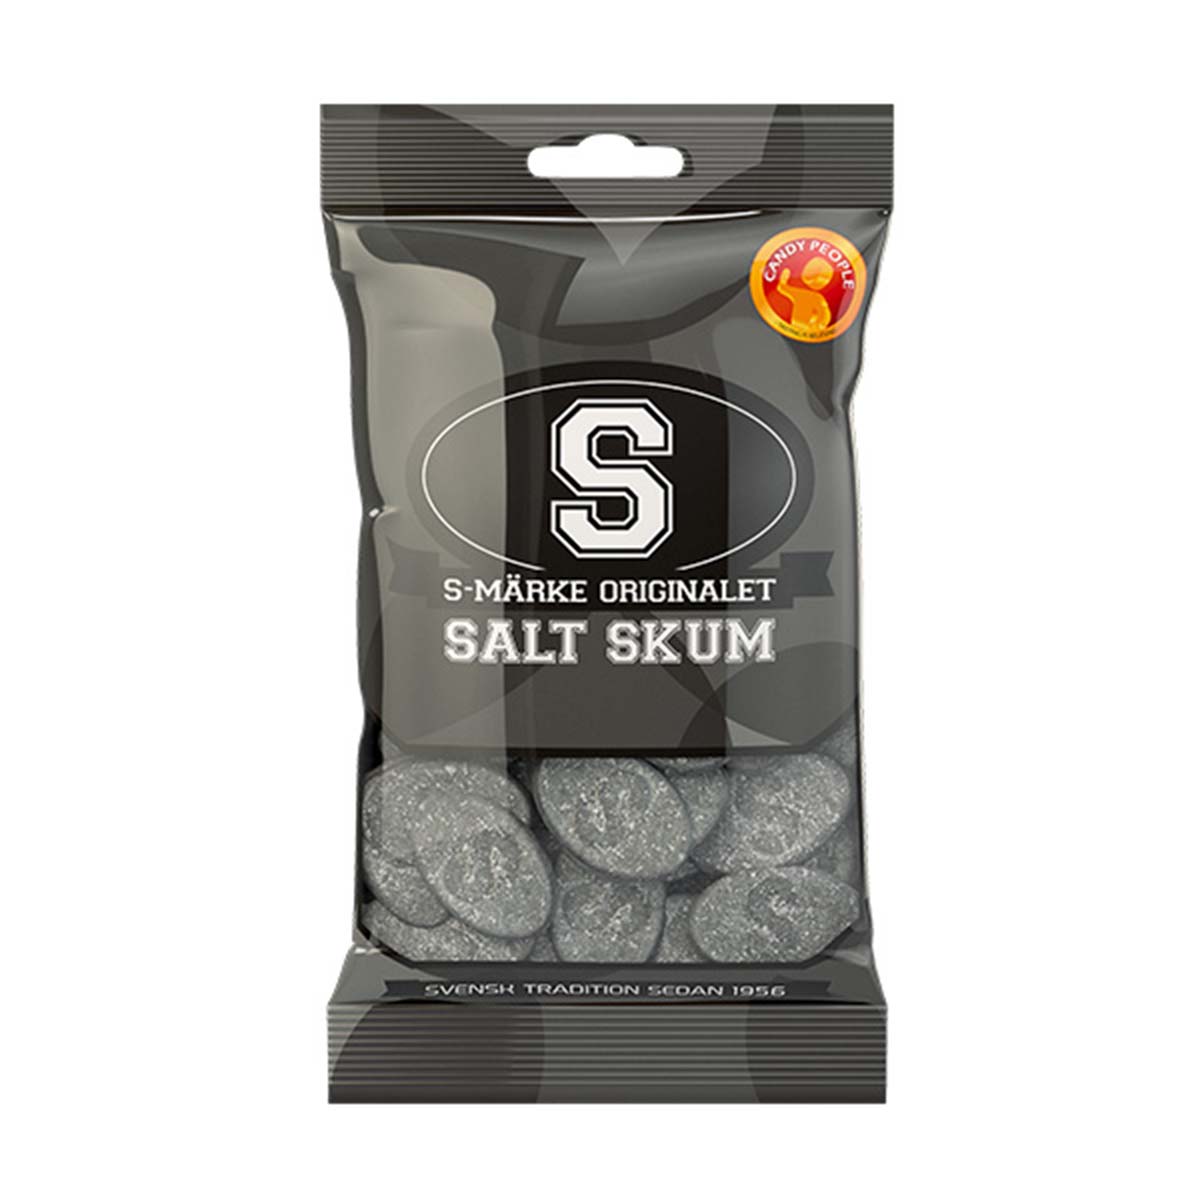 Godispåse S-märken salt skum 70 g